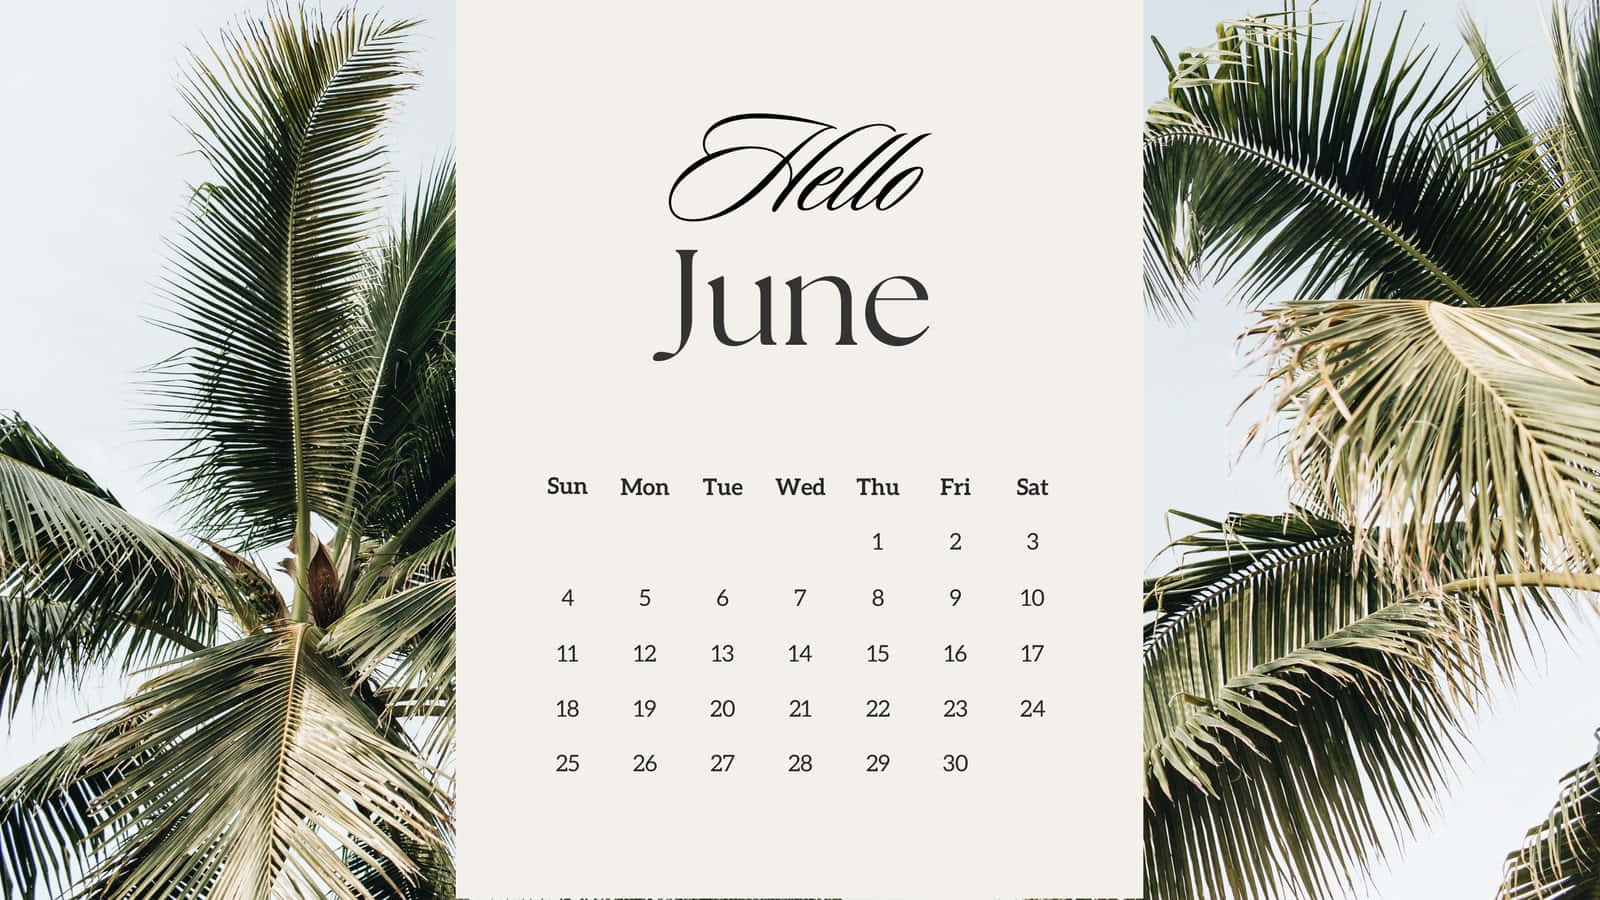 Hello June Calendar Palm Trees Wallpaper